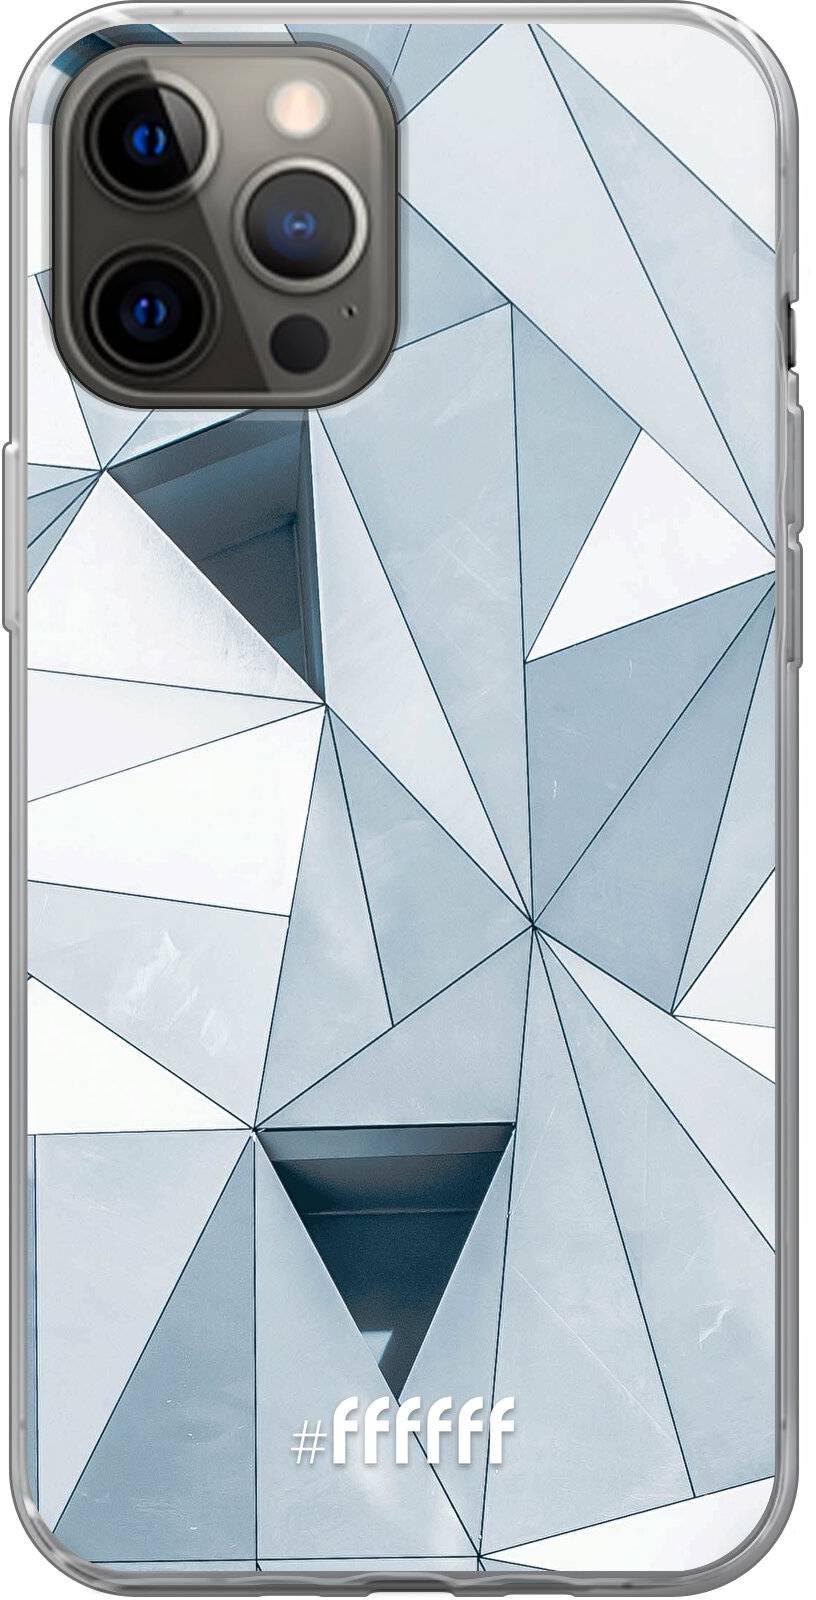 Mirrored Polygon iPhone 12 Pro Max